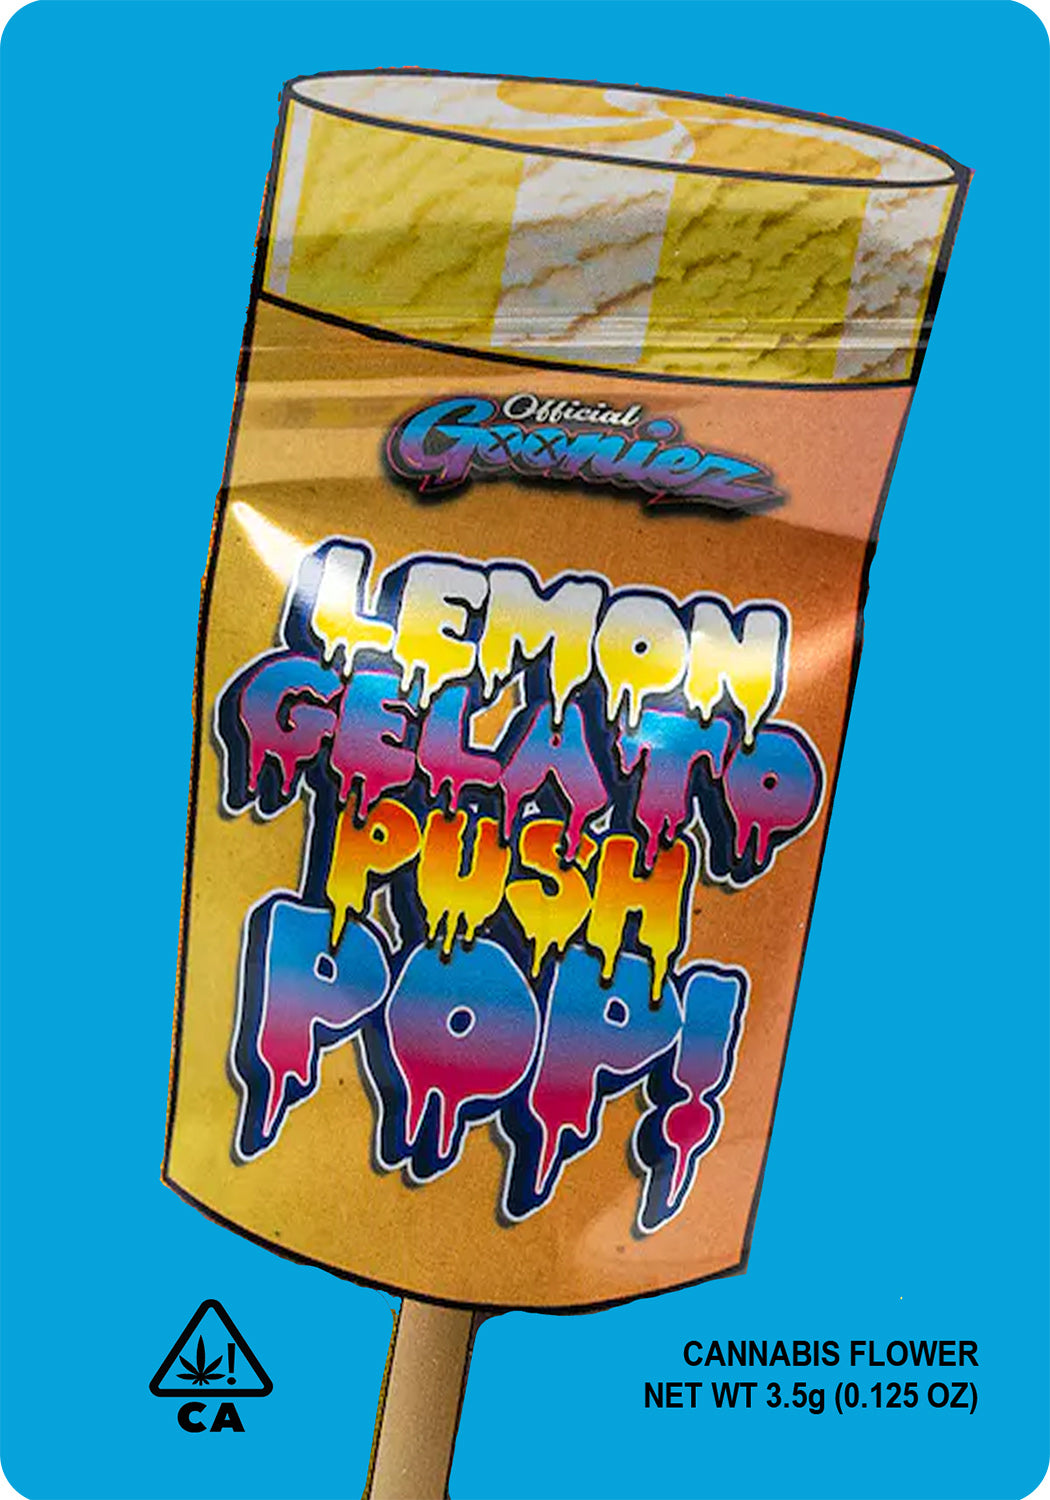 Lemon Gelato Push Pop Mylar Bags 1g Gram 3.5g Eighth 7g Quarter 28g Oz Ounce 112g Quarter Pound Gooniez Teds Budz Sticker Bag Fire Mylar